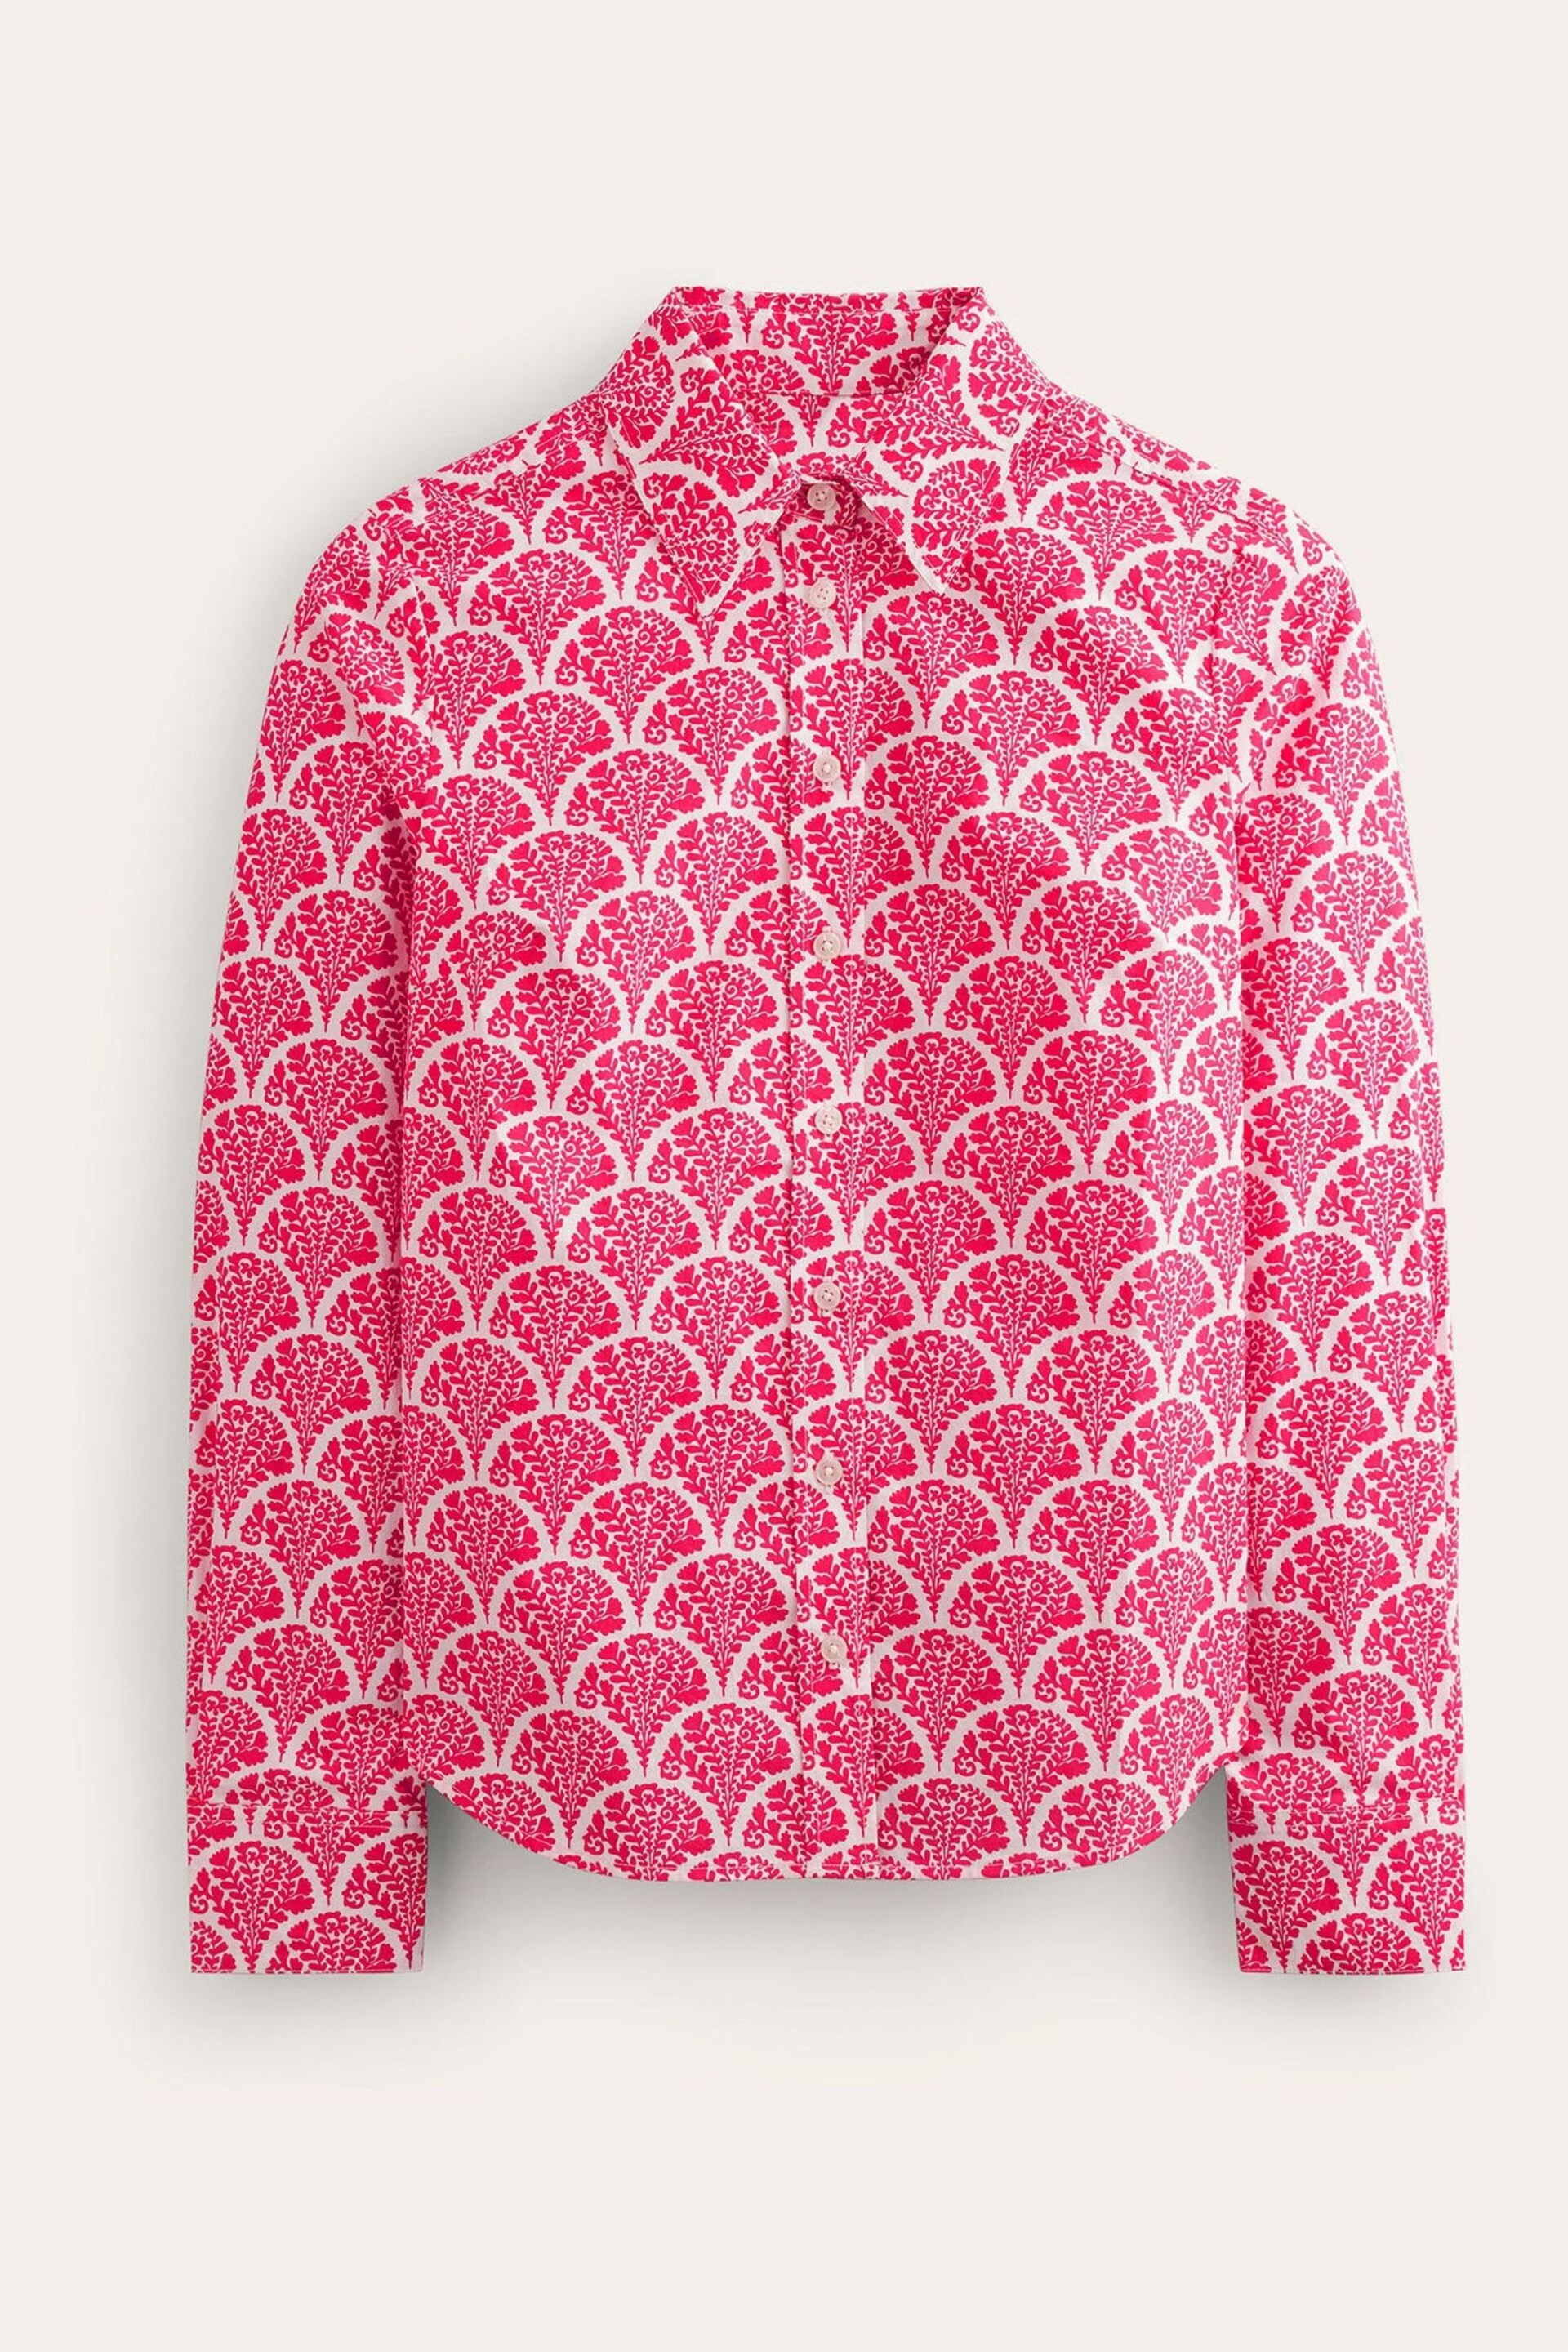 Boden Pink Sienna Cotton Shirt - Image 6 of 6